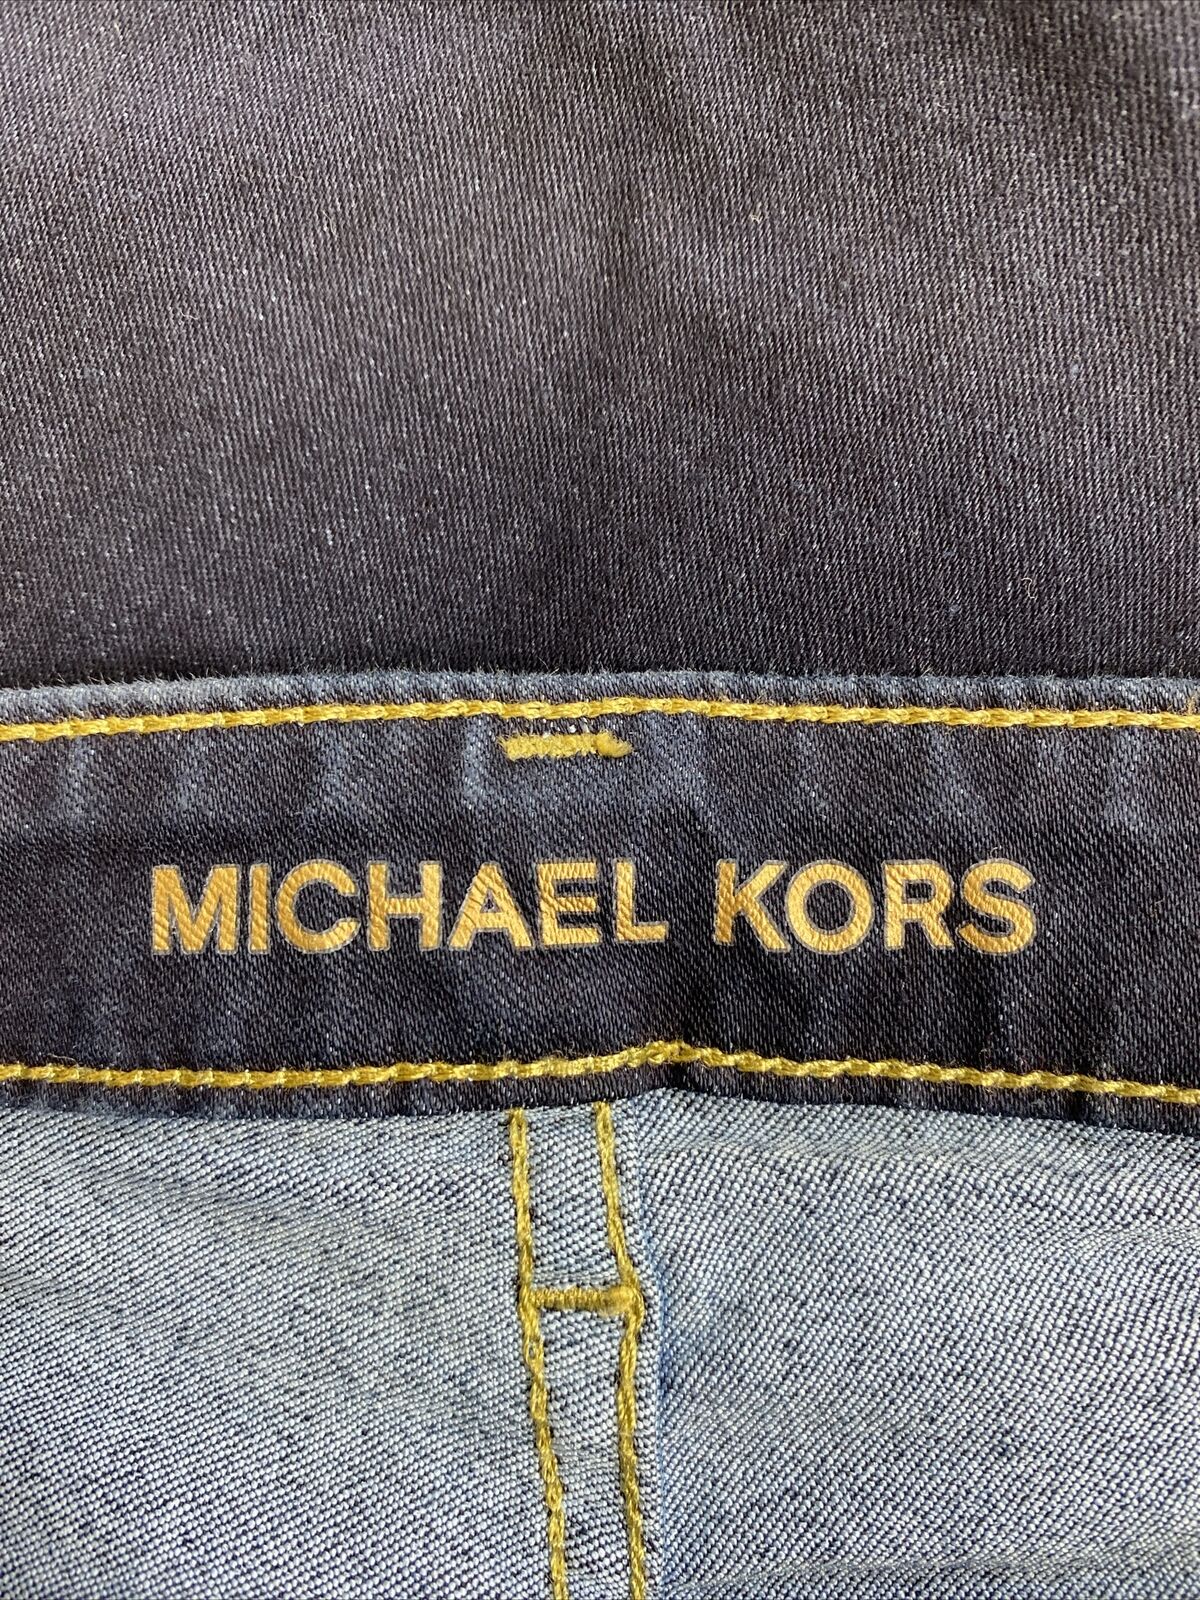 Michael Kors Women's Dark Wash Stretch Skinny Jeans - 6